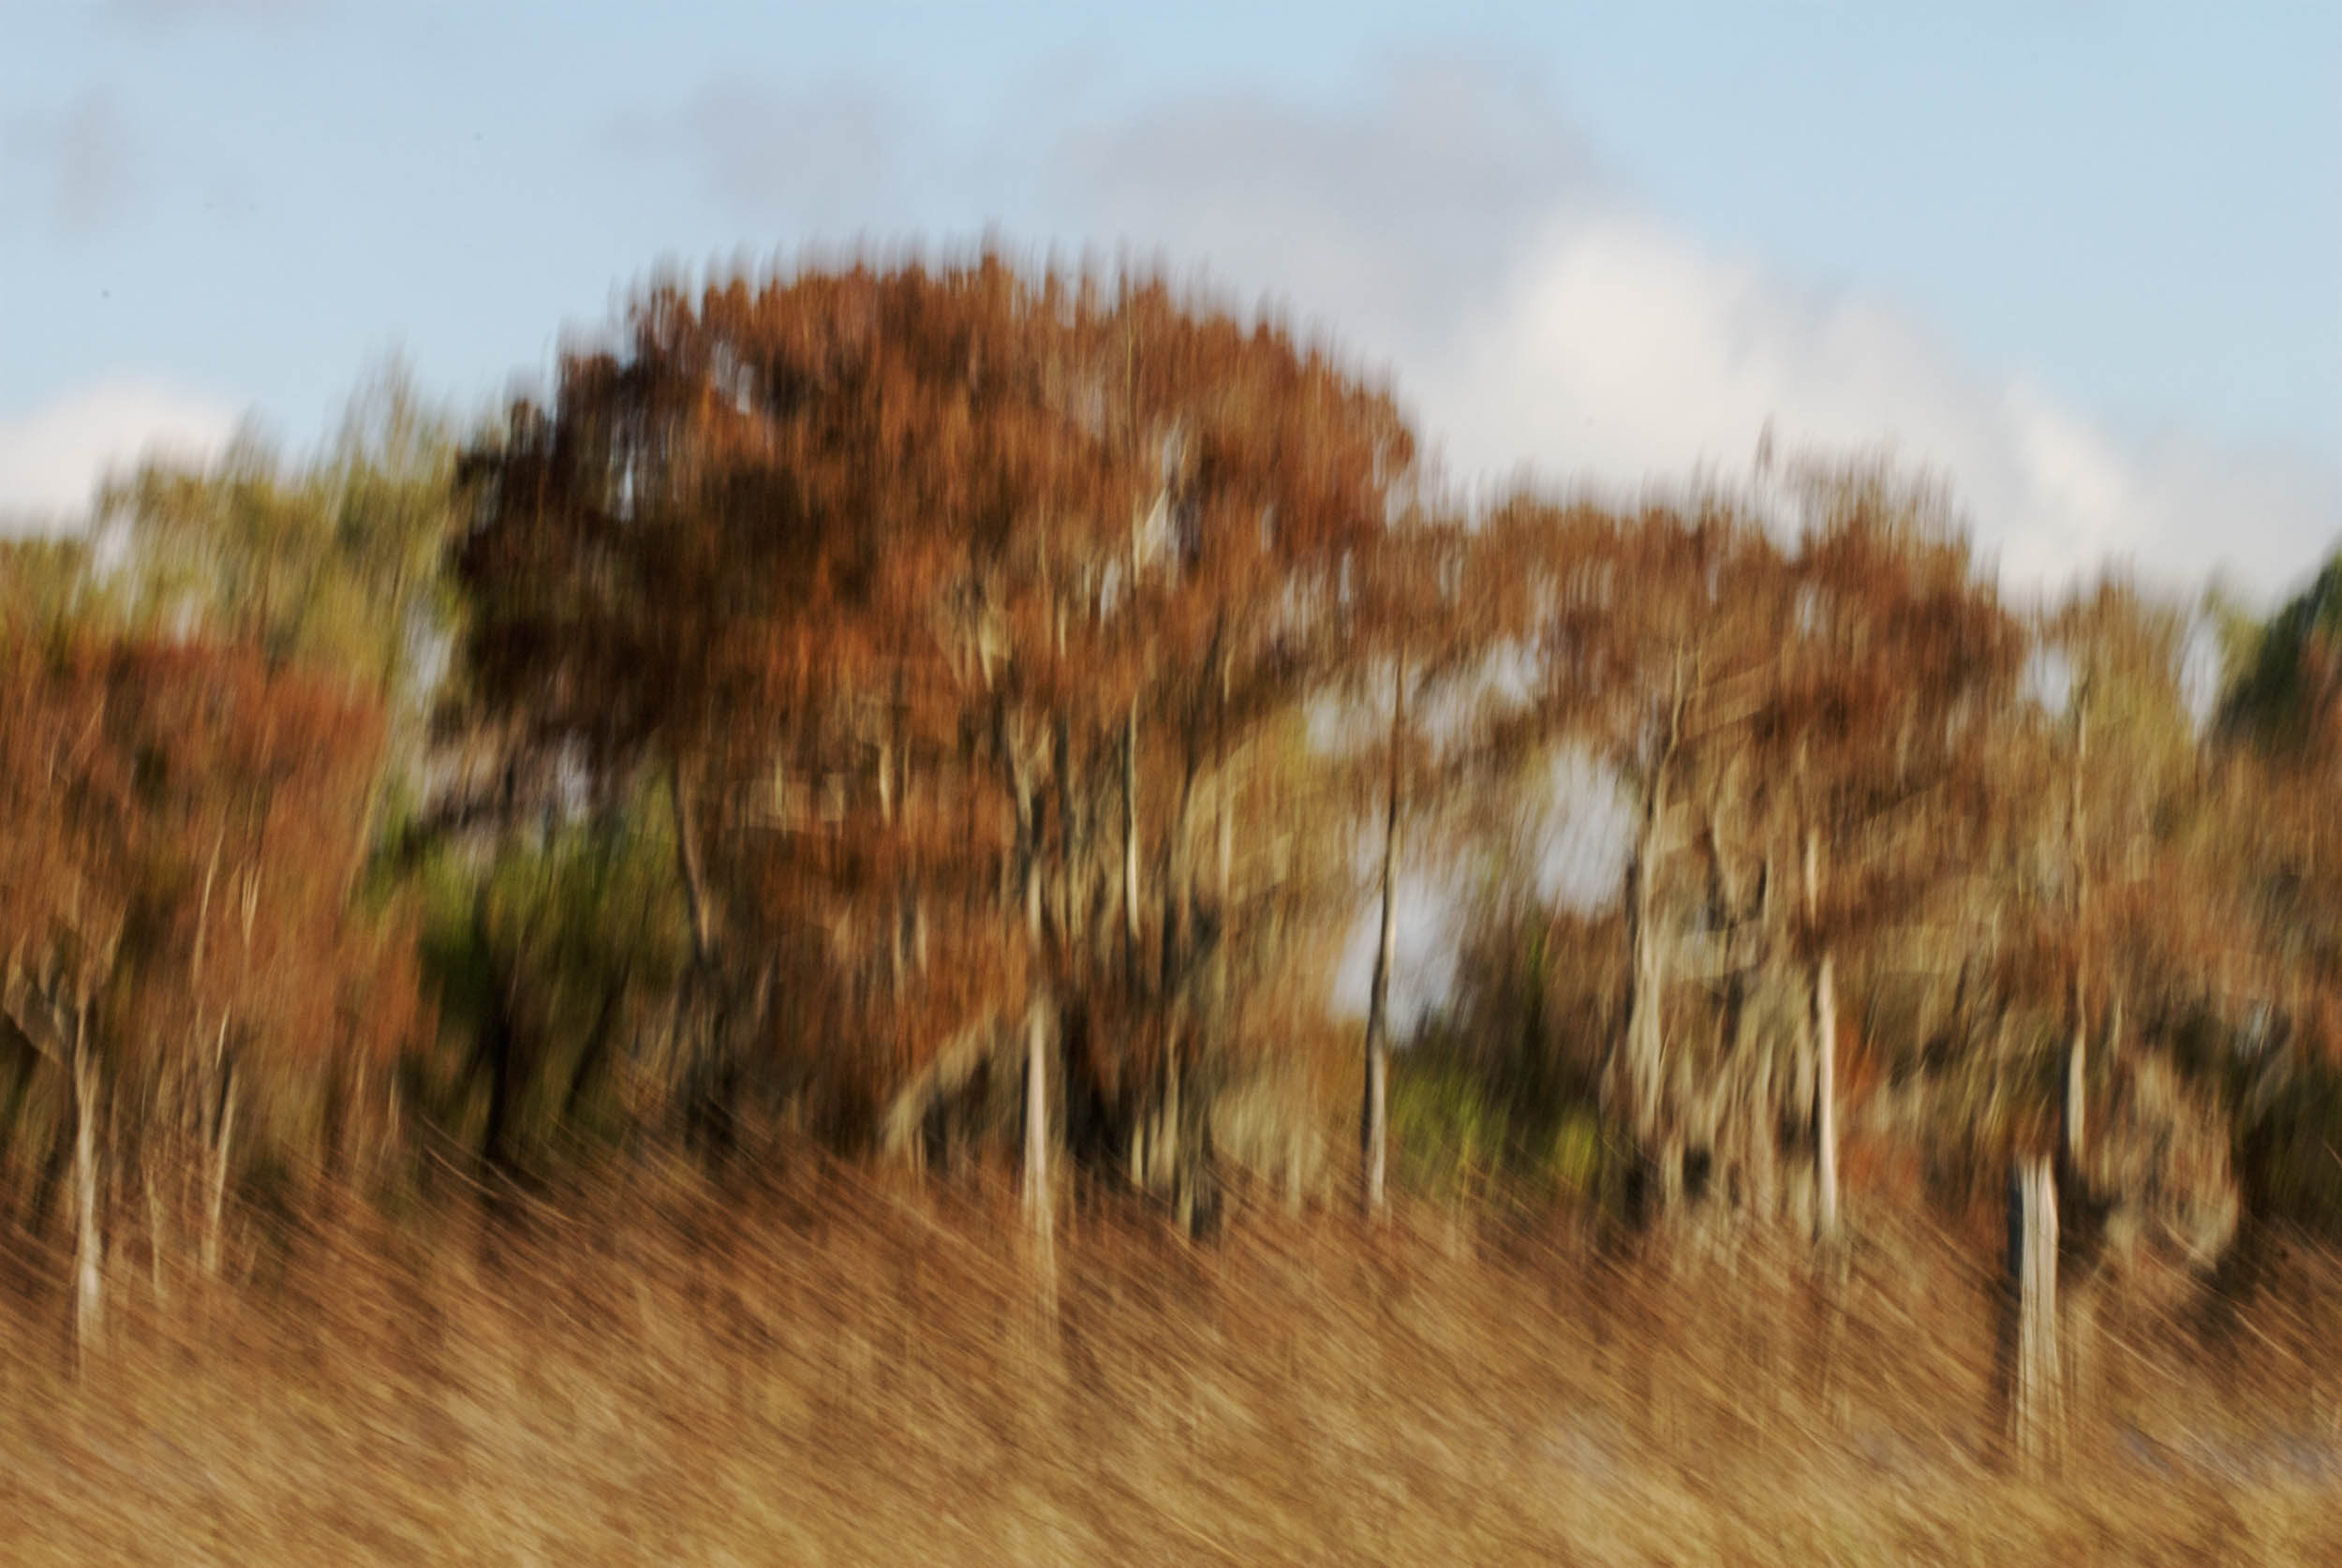  Cypress Landscape - Motion Blur 